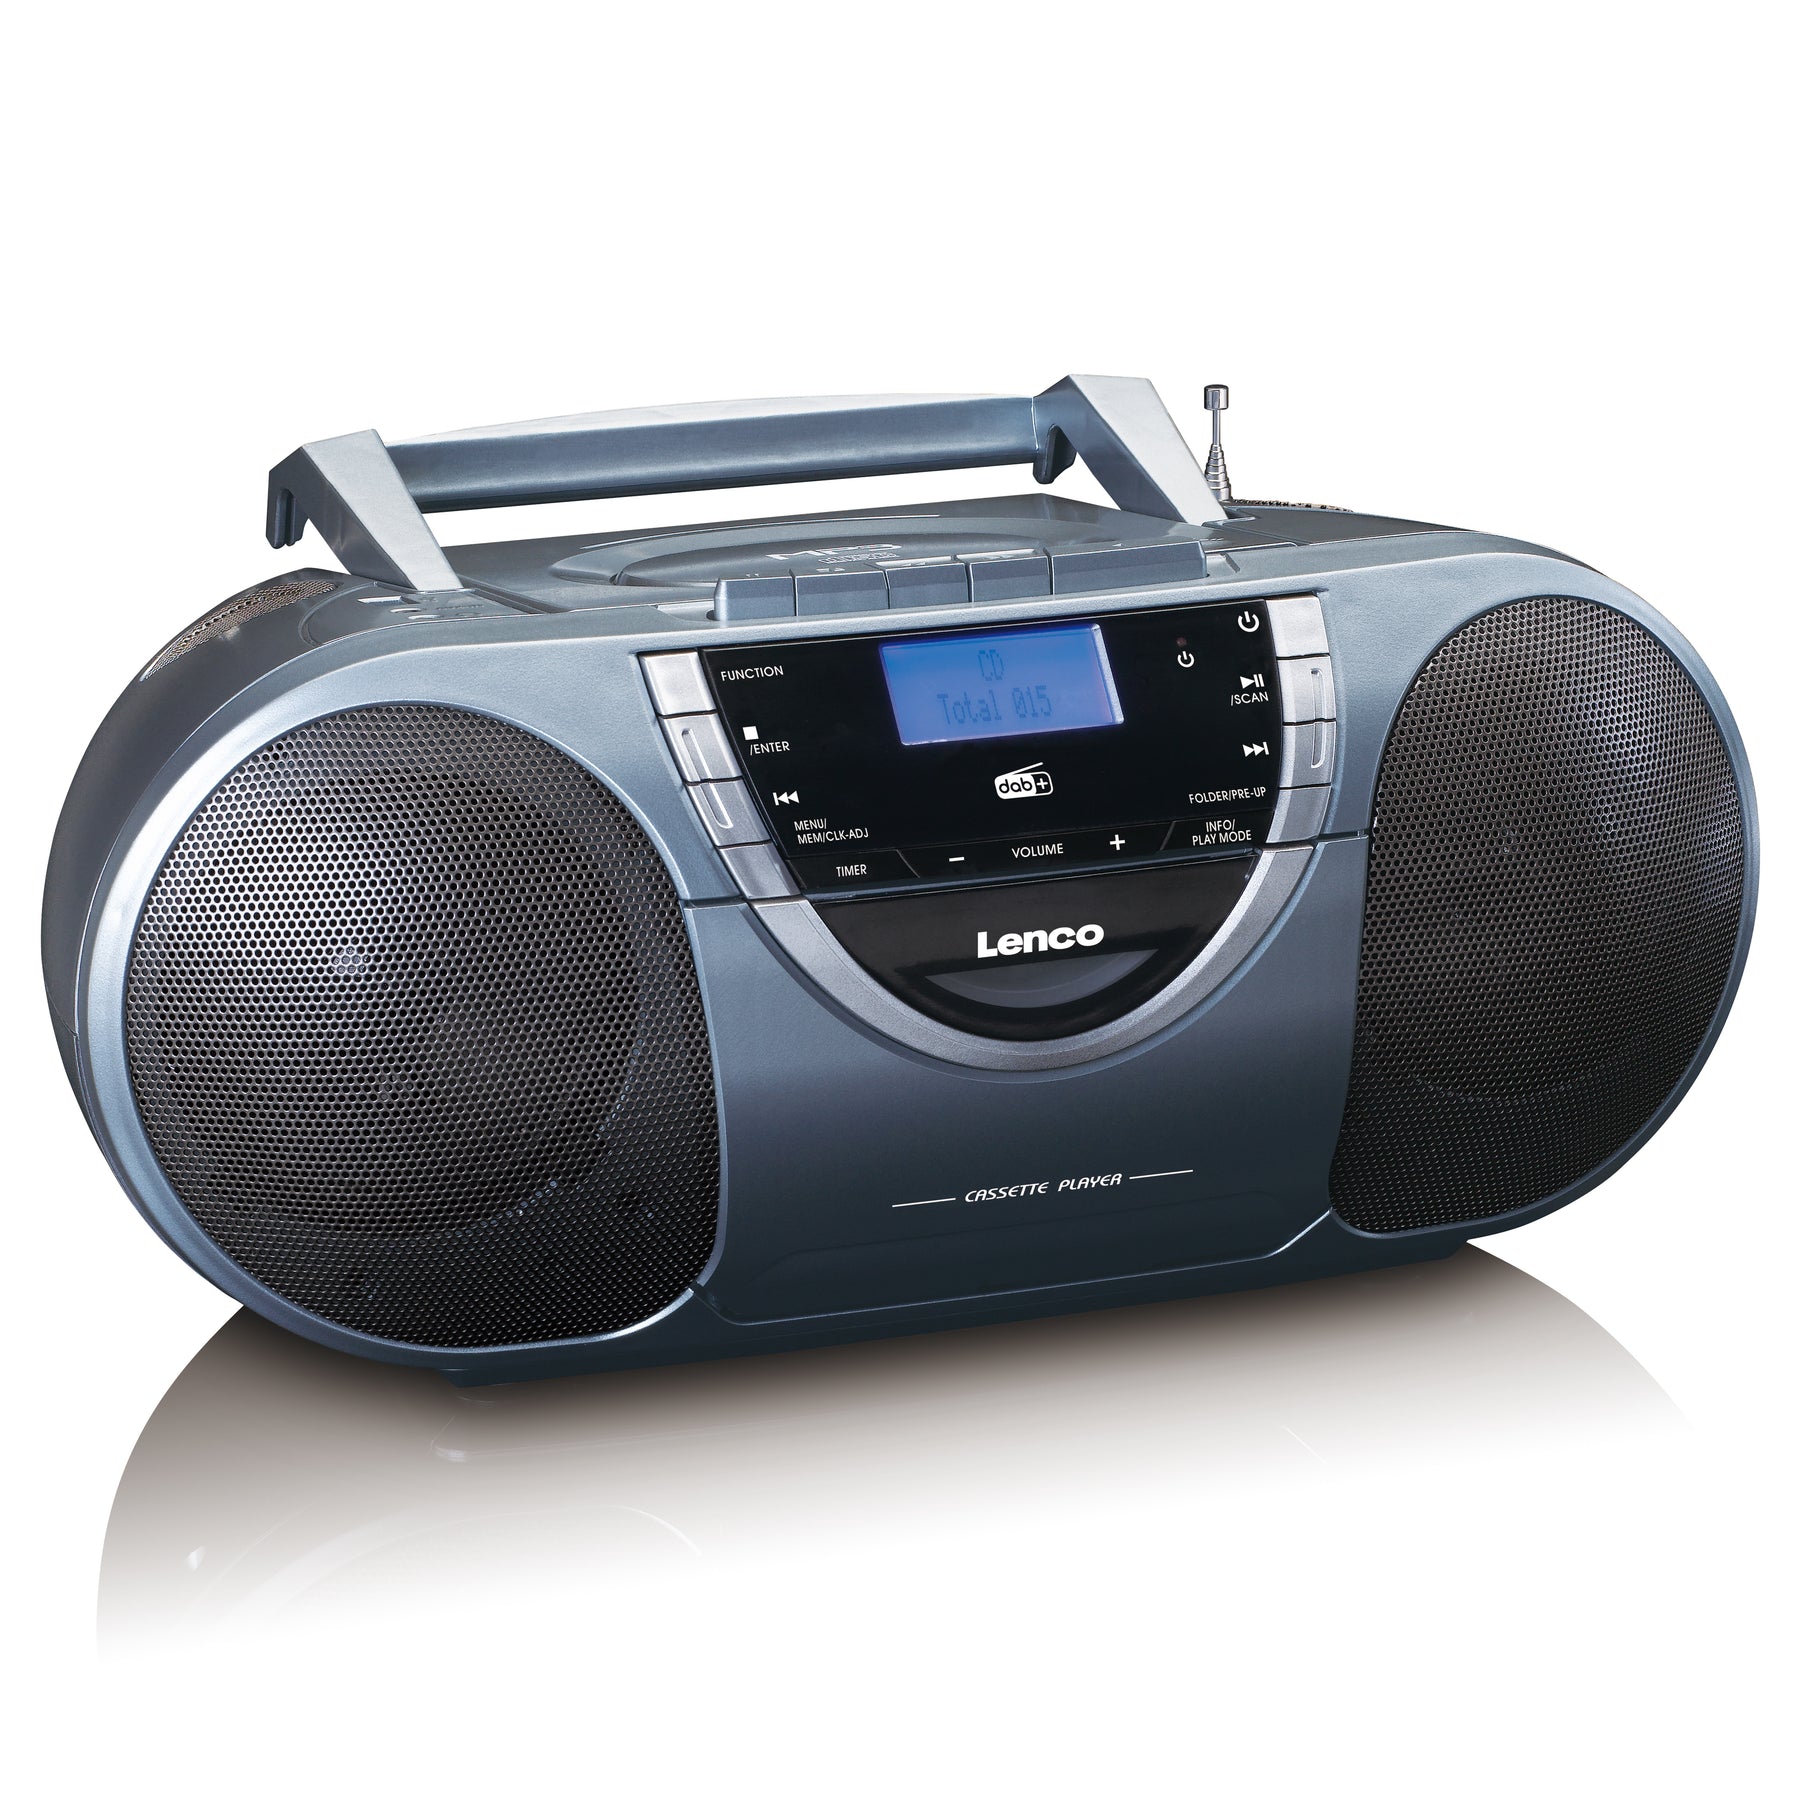 and player FM SCD-6800GY – Lenco radio LENCO -Catalog with CD/ MP3 DAB+, - Boombox